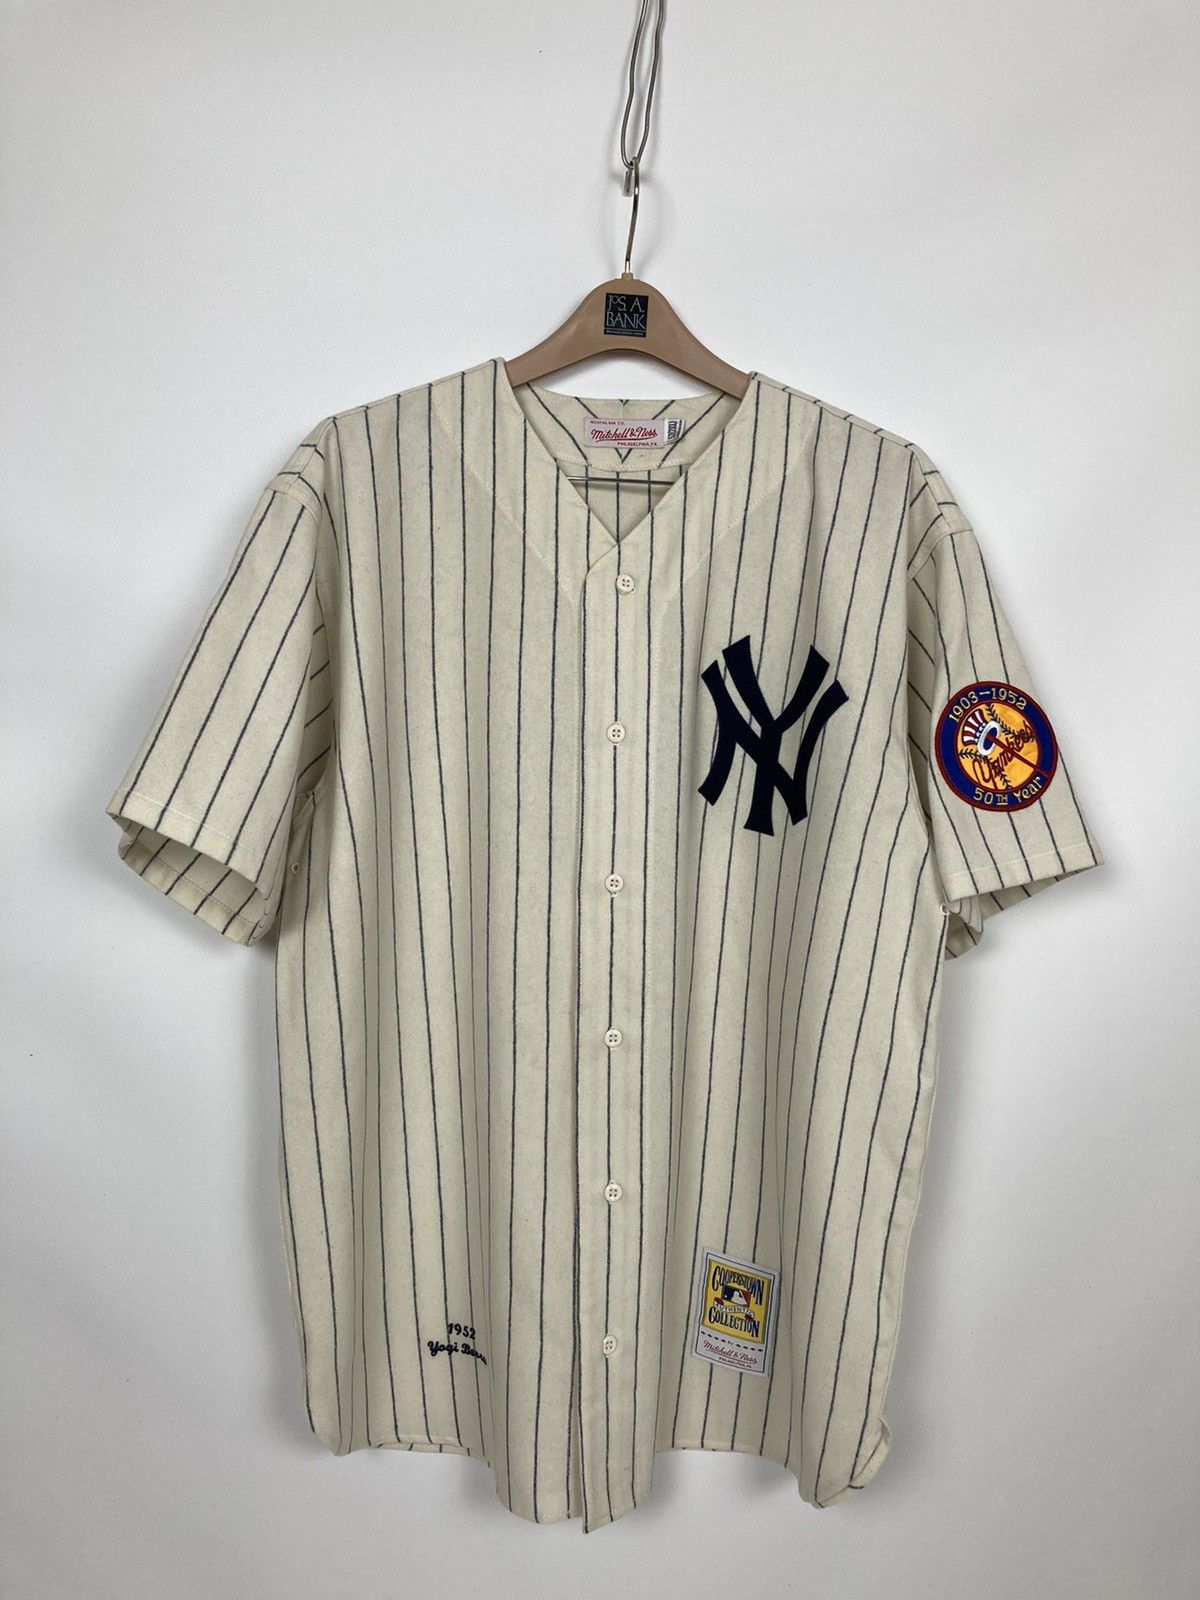 Mitchell & Ness 1952 Yogi Berra #8 Yankees 4XL (60) Mitchell & Ness  Authentic Wool Jersey $250